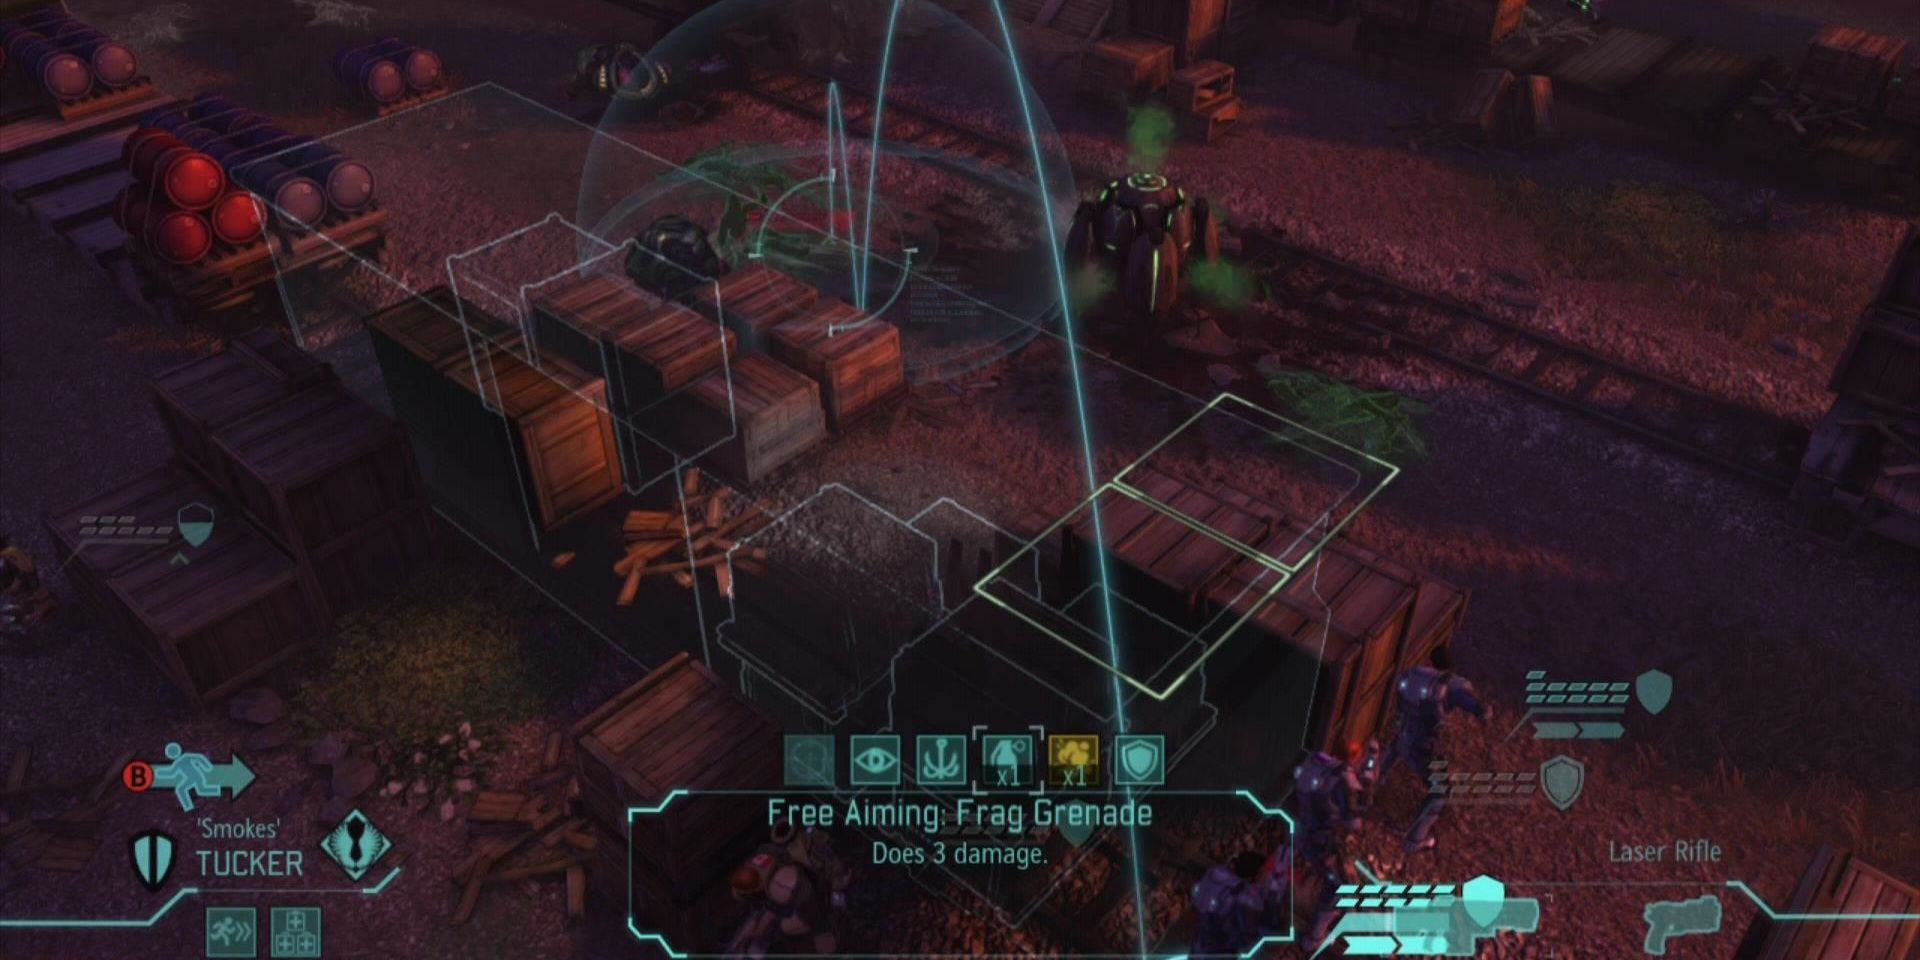 https://www.mobygames.com/game/xbox360/xcom-enemy-unknown/screenshots/gameShotId,613751/